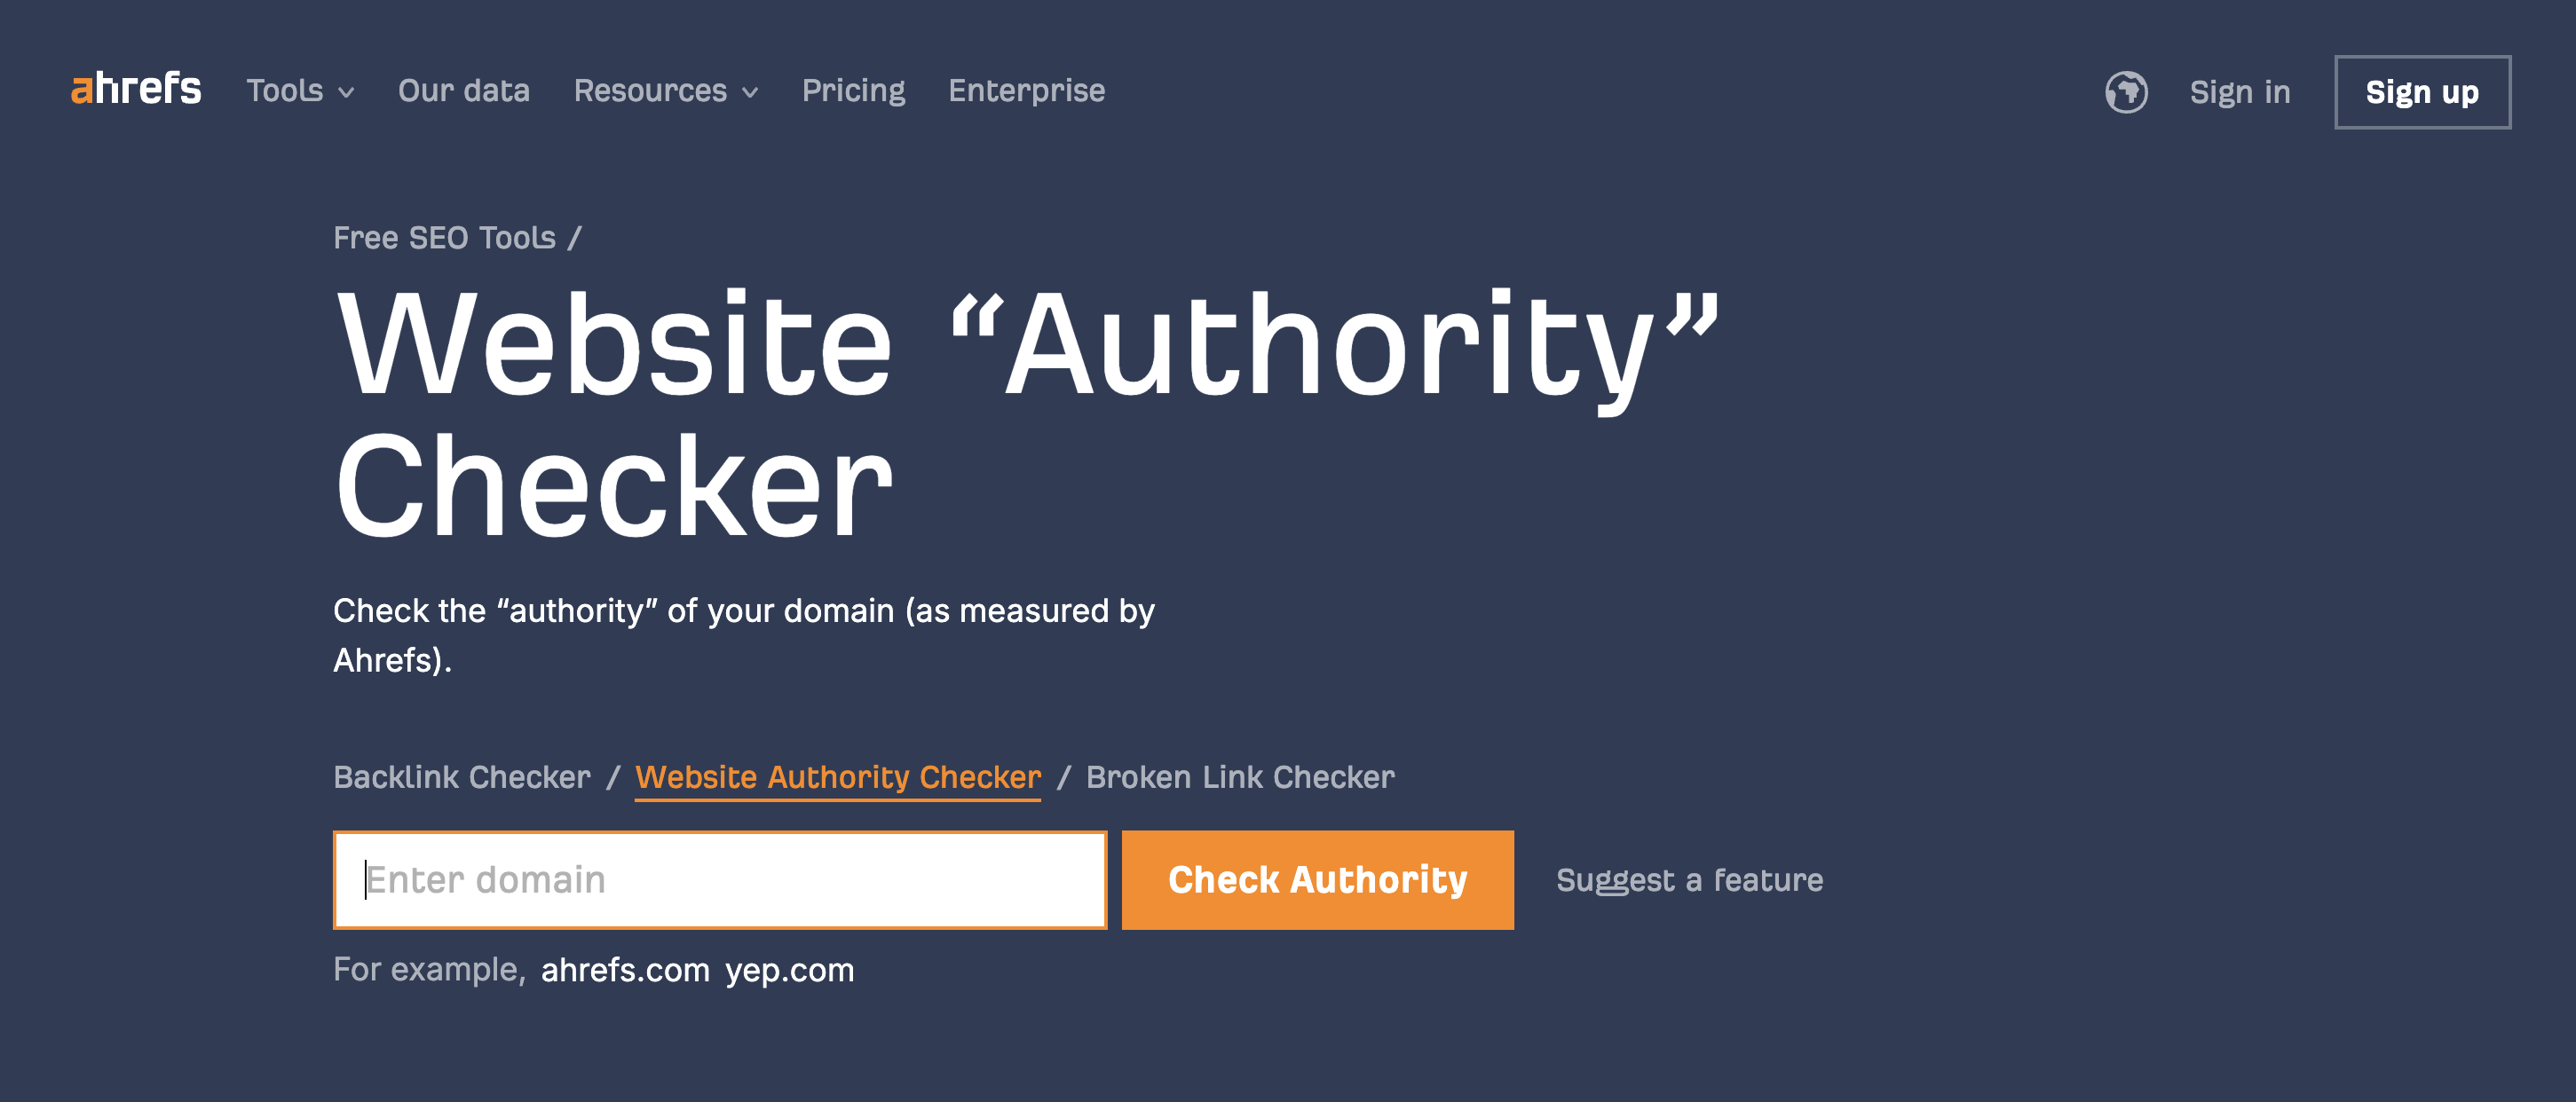 Website-Authority-Checker-Website